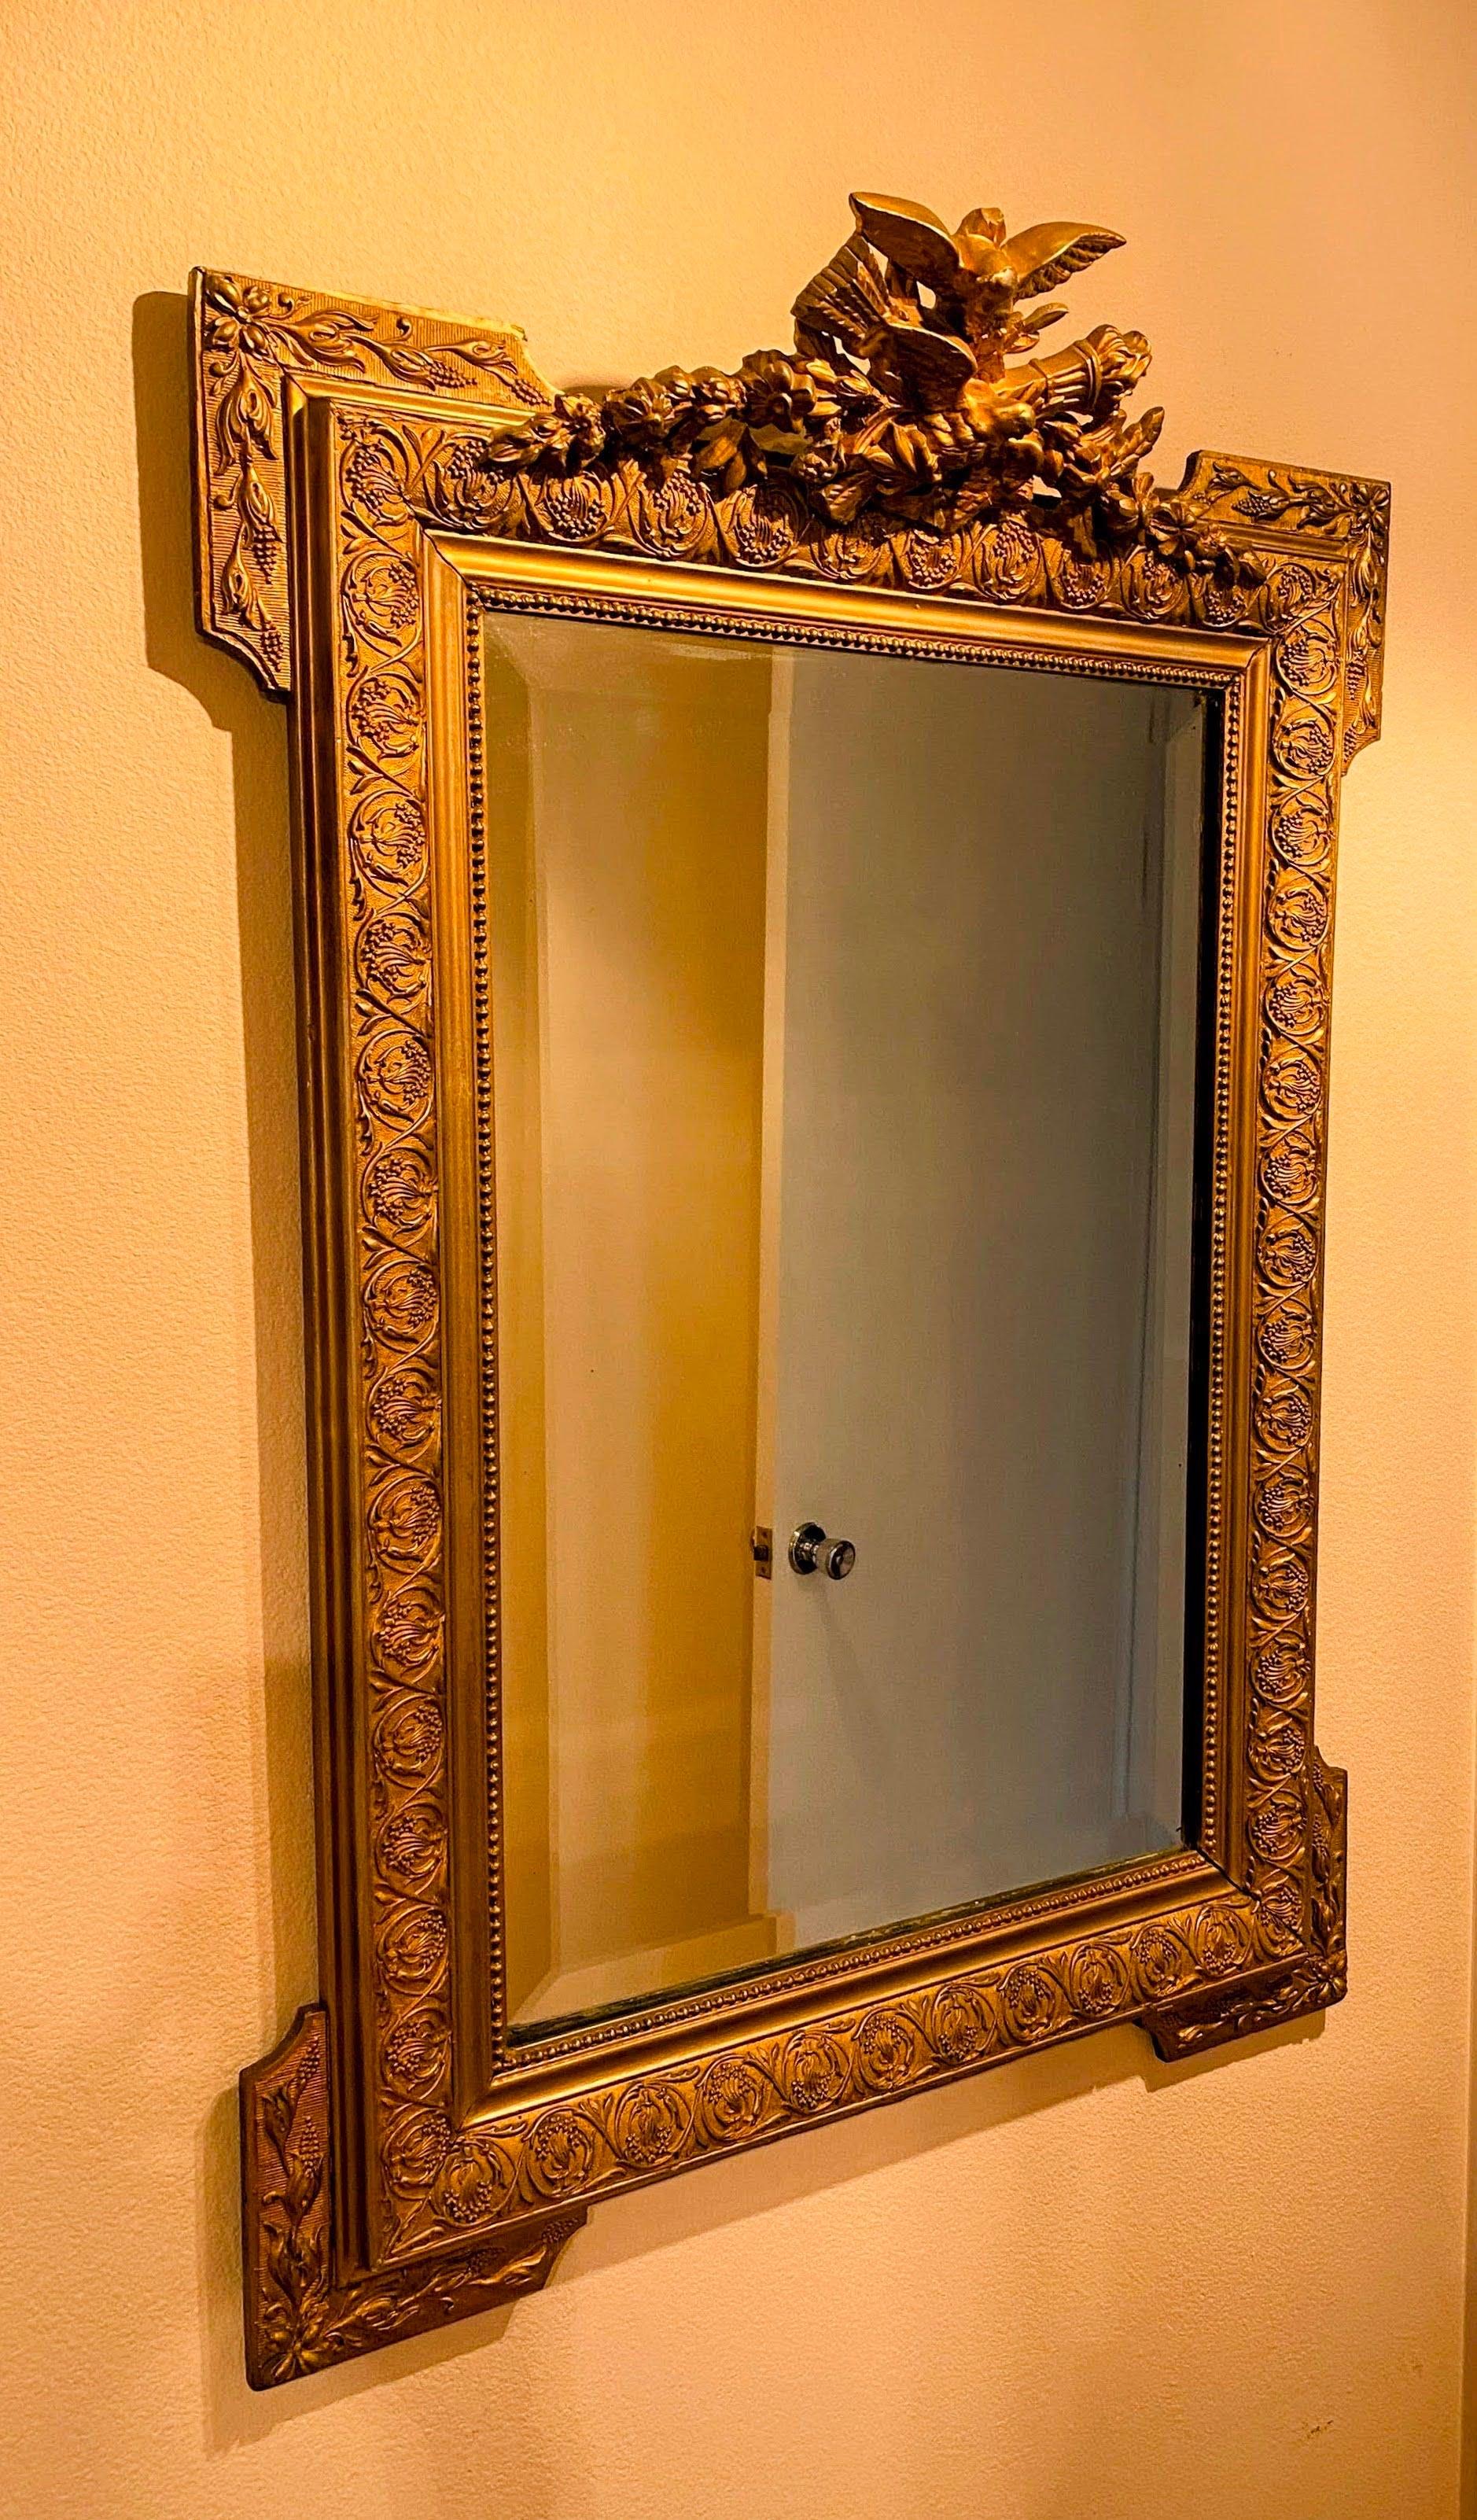 Rococo Revival Antique French Gold Eagle Crest Mirror